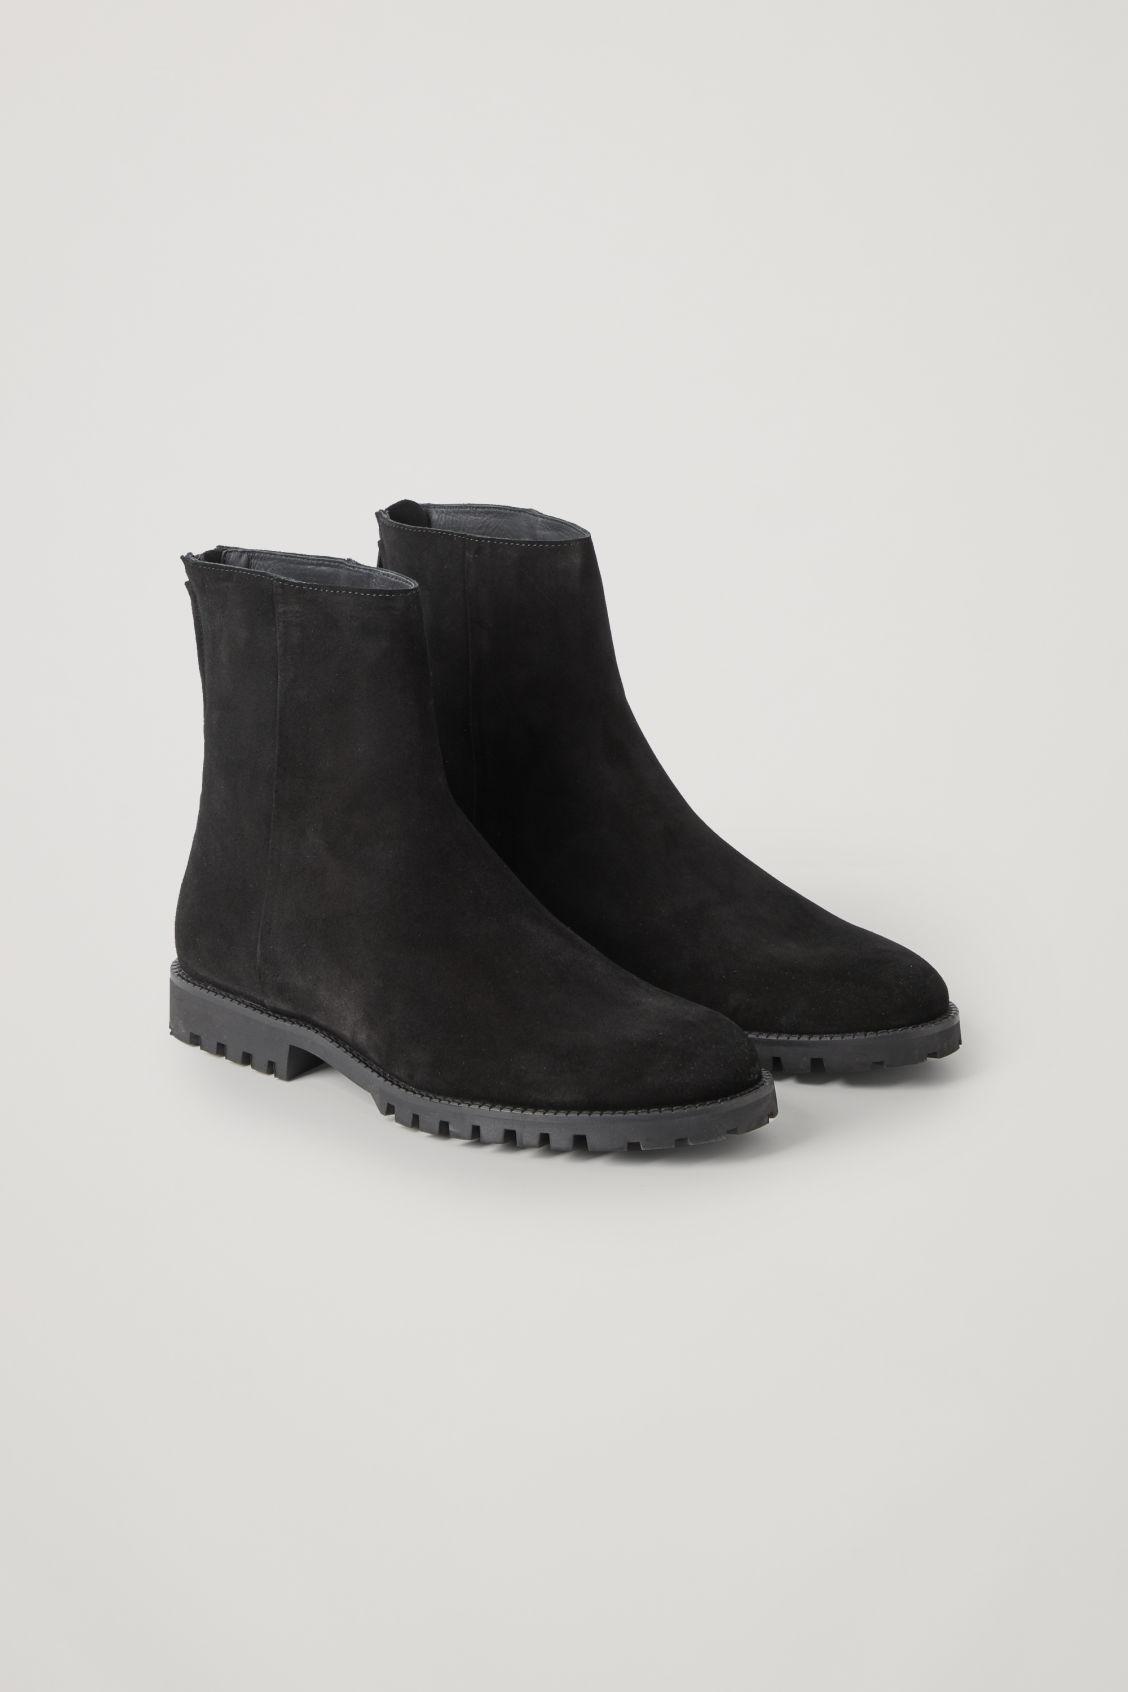 Långiver Bestemt kapok COS Waterproof-suede Zipped Boots in Black for Men | Lyst